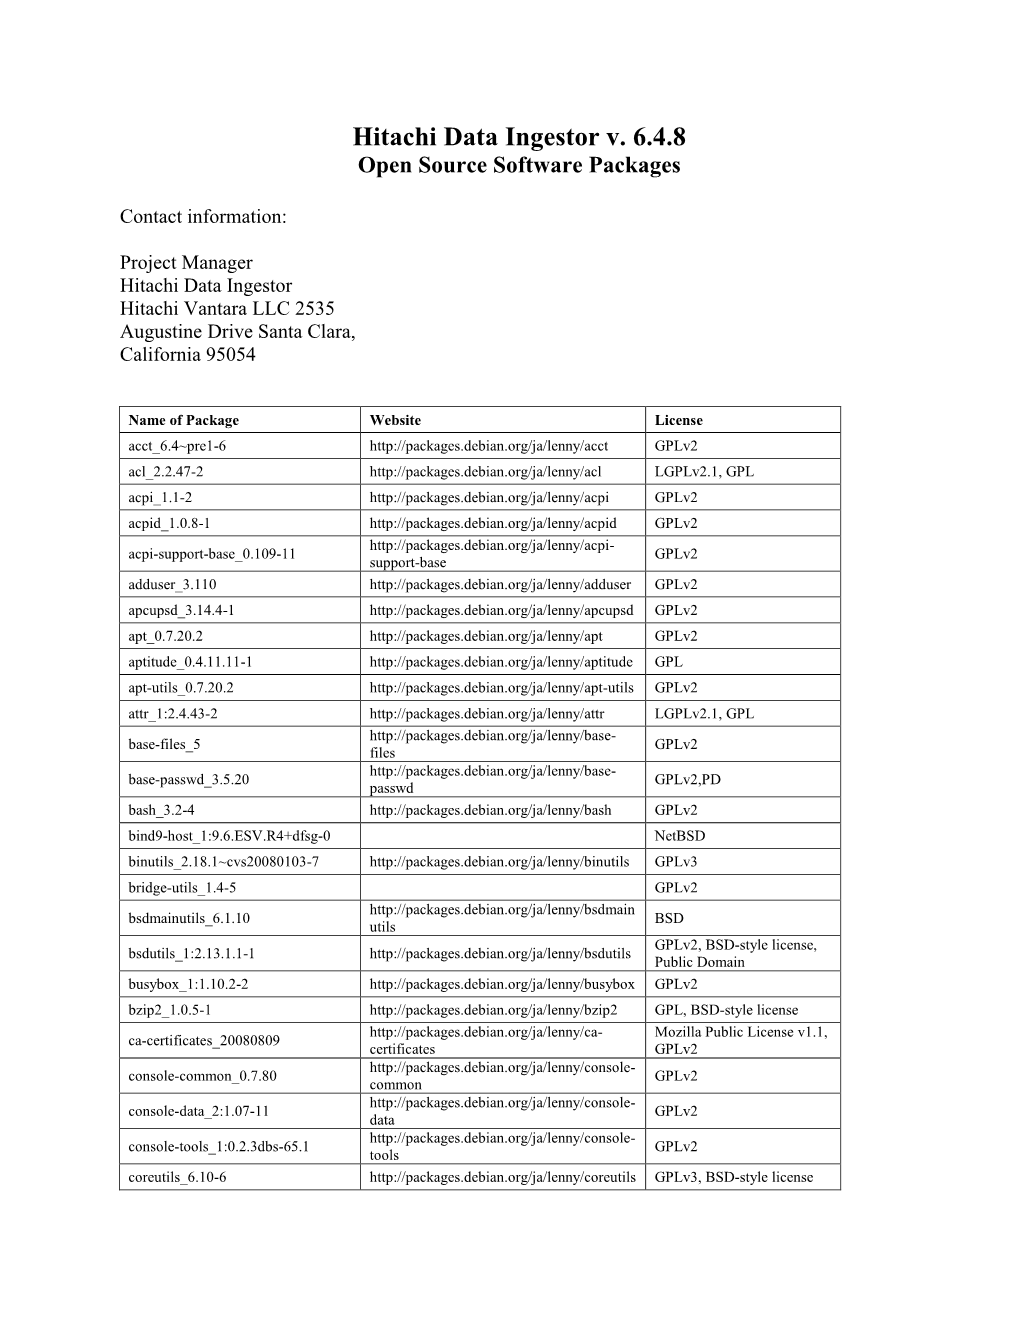 Hitachi Data Ingestor (HDI) V. 6.4.8